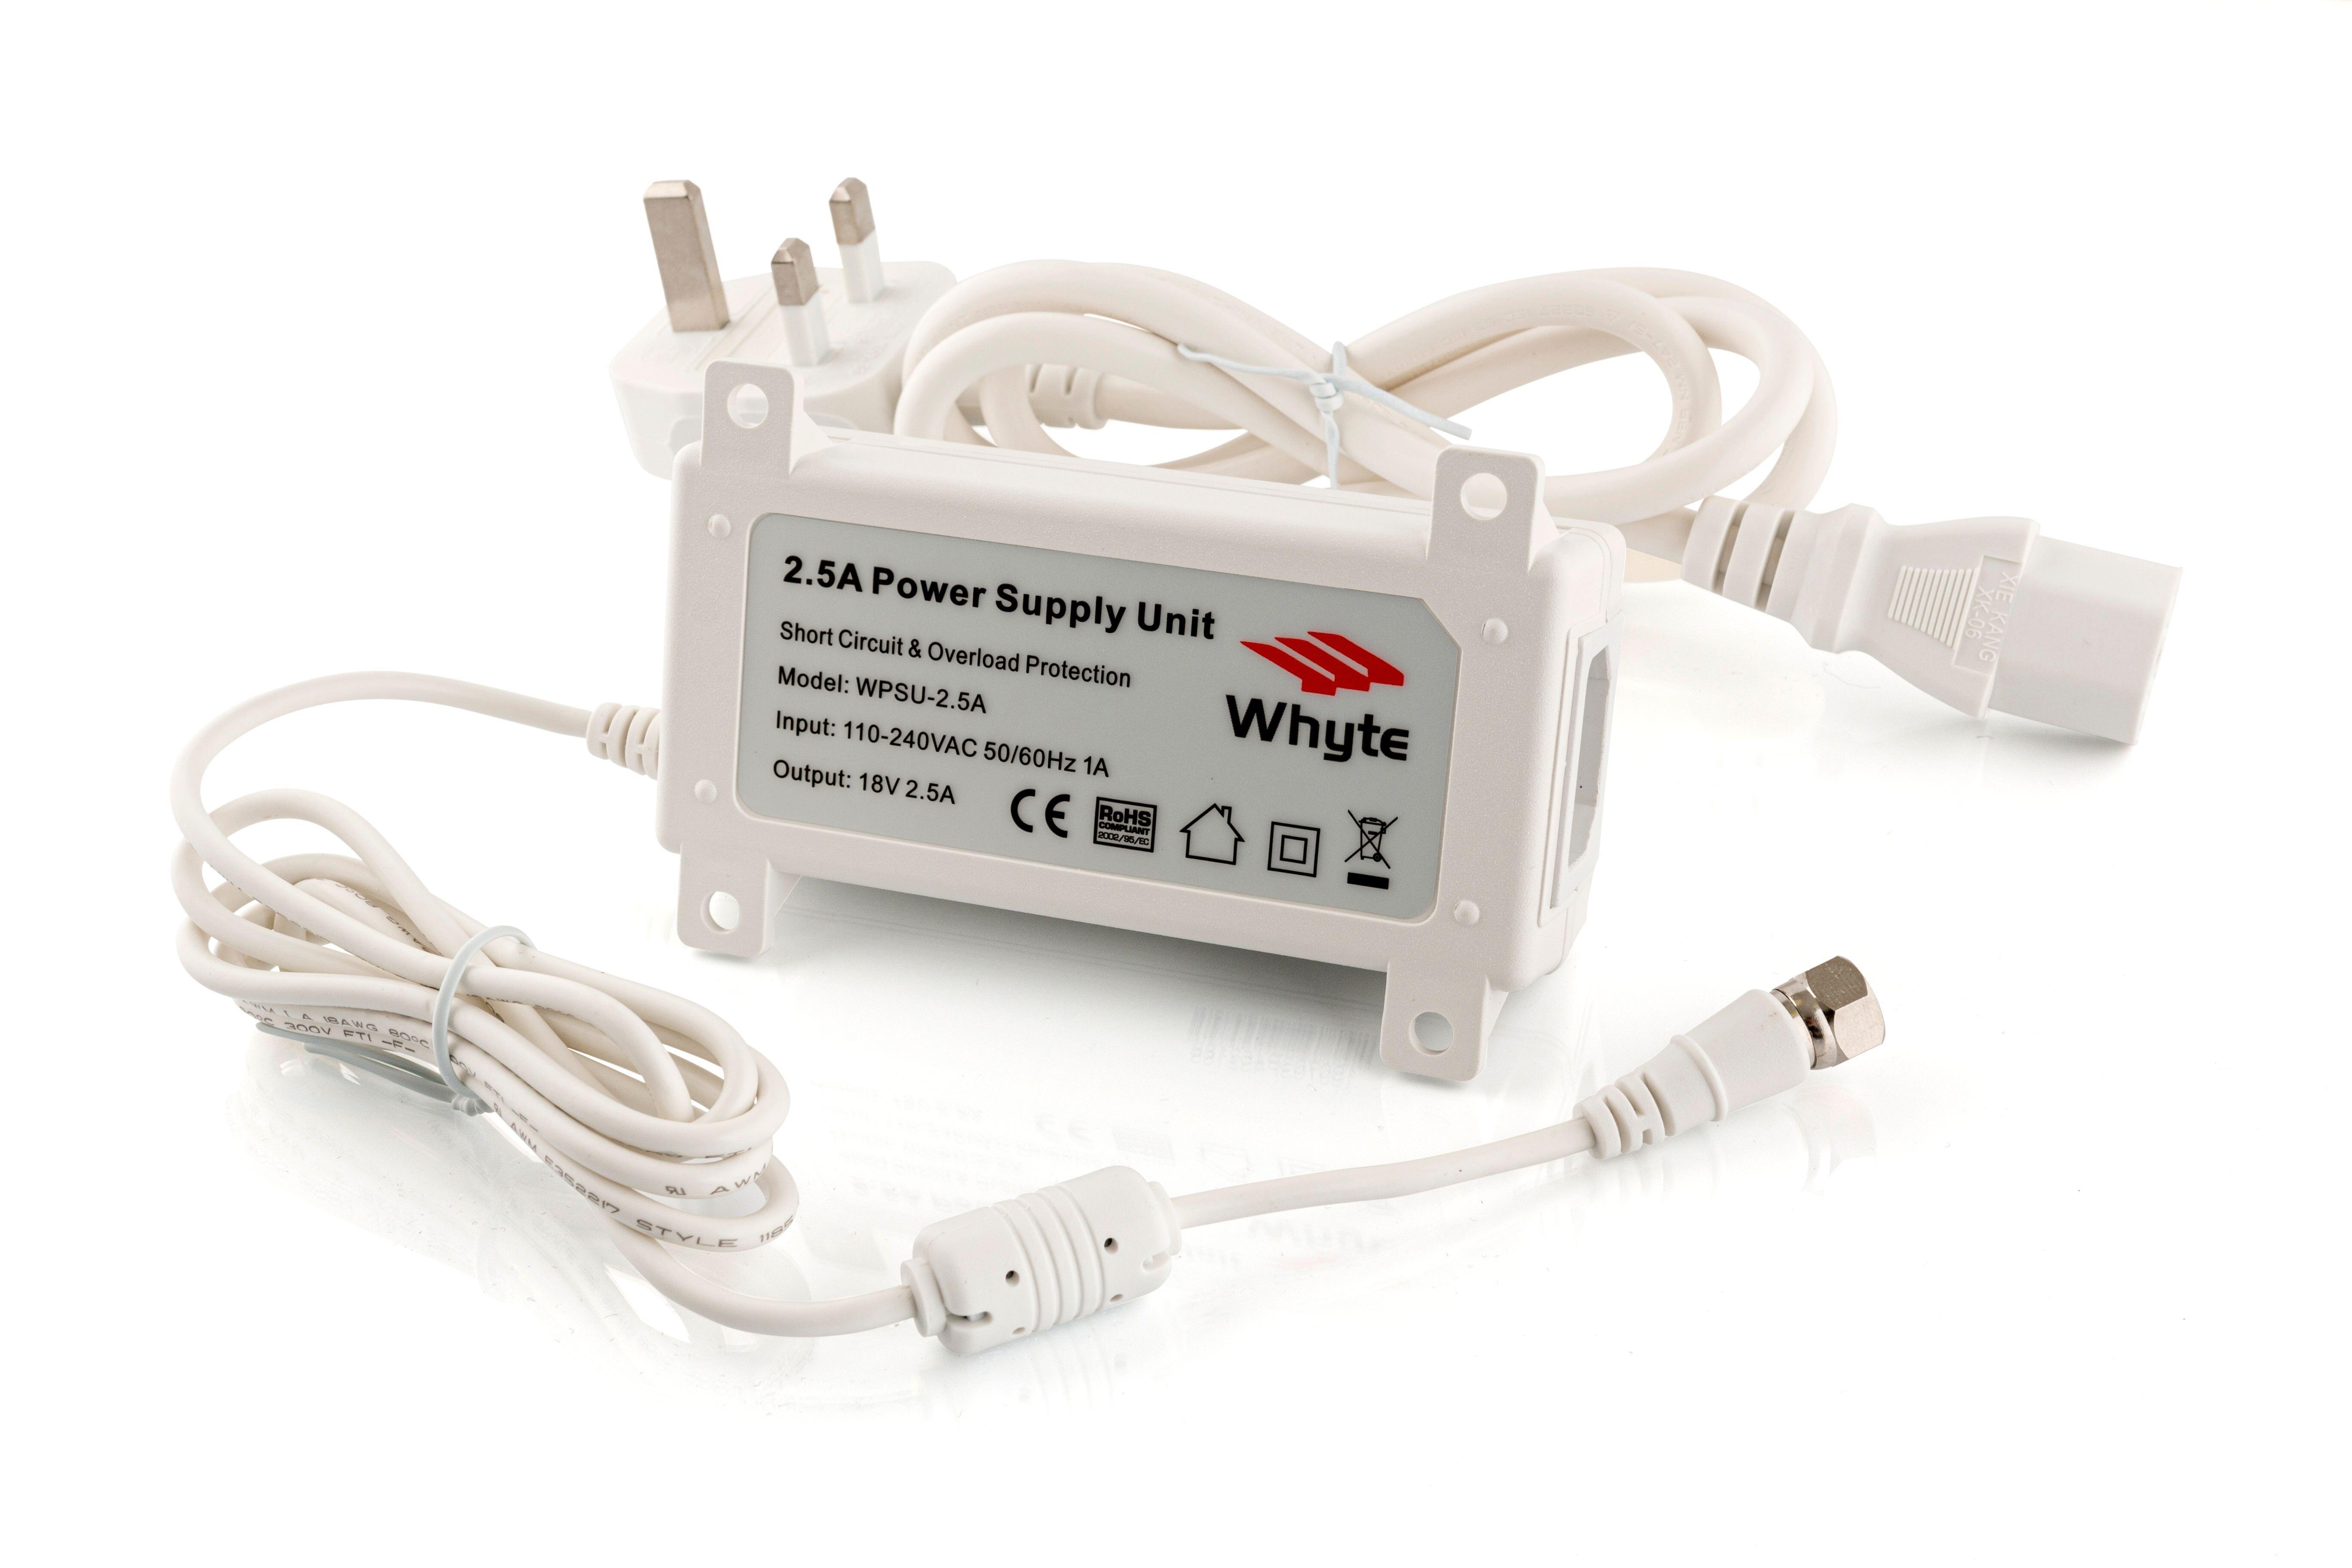 Whyte power supply WPSU-2.5A